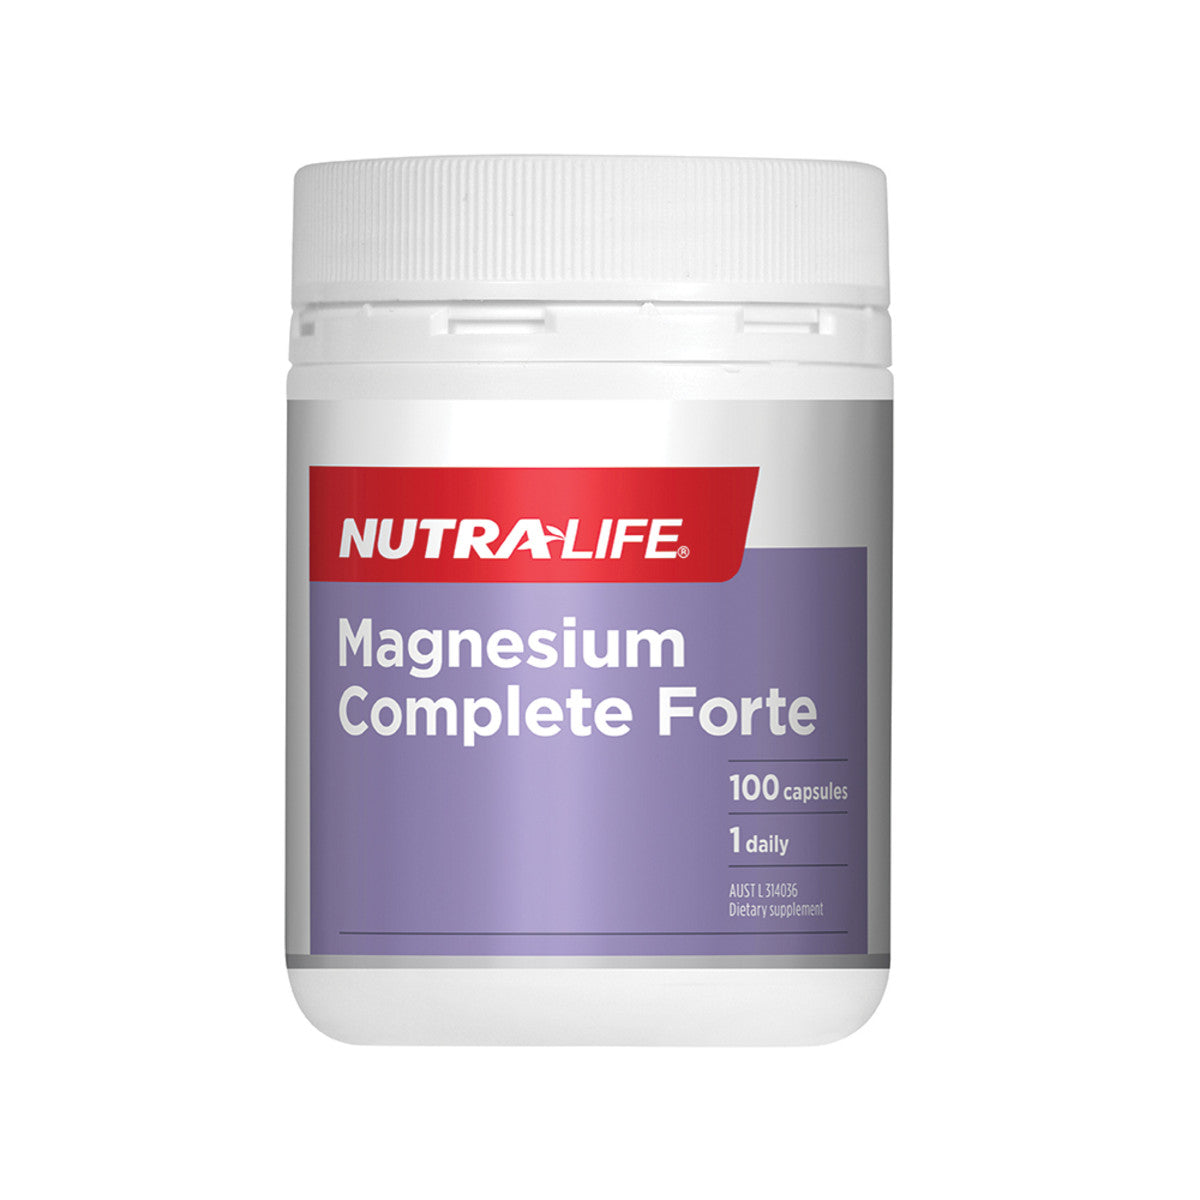 NutraLife - Magnesium Complete Forte